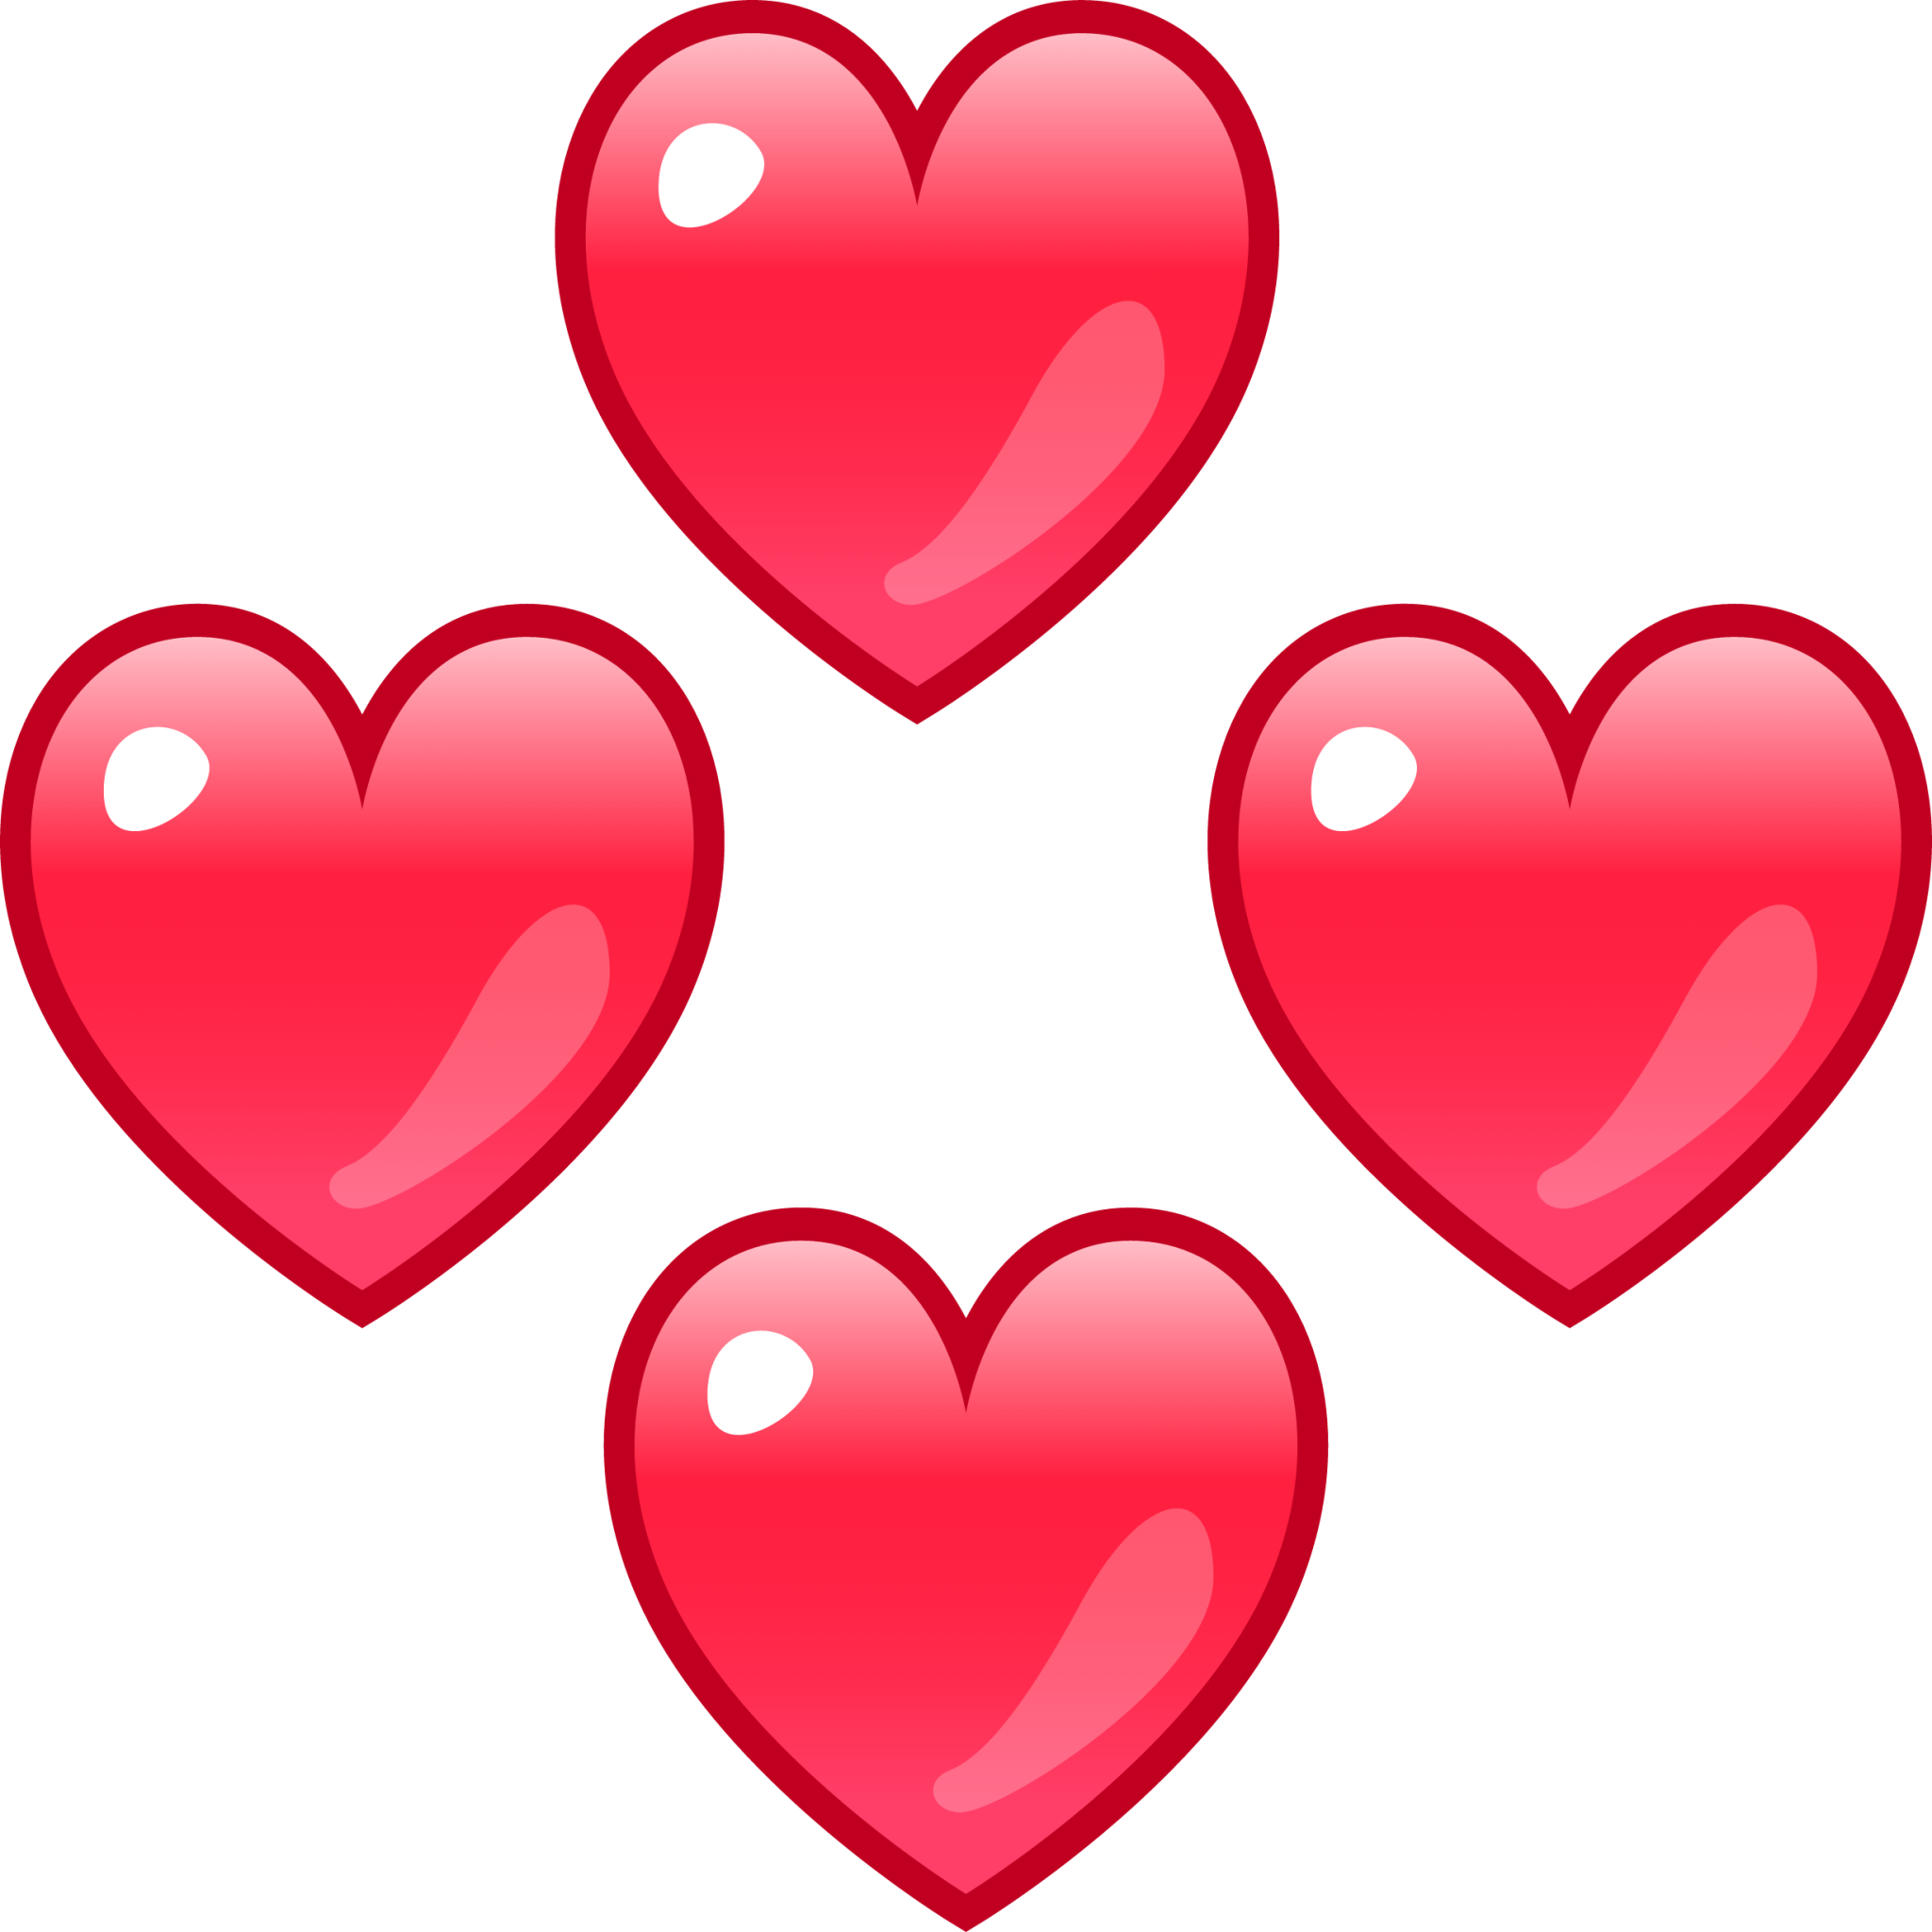 revolving hearts 2 emoji